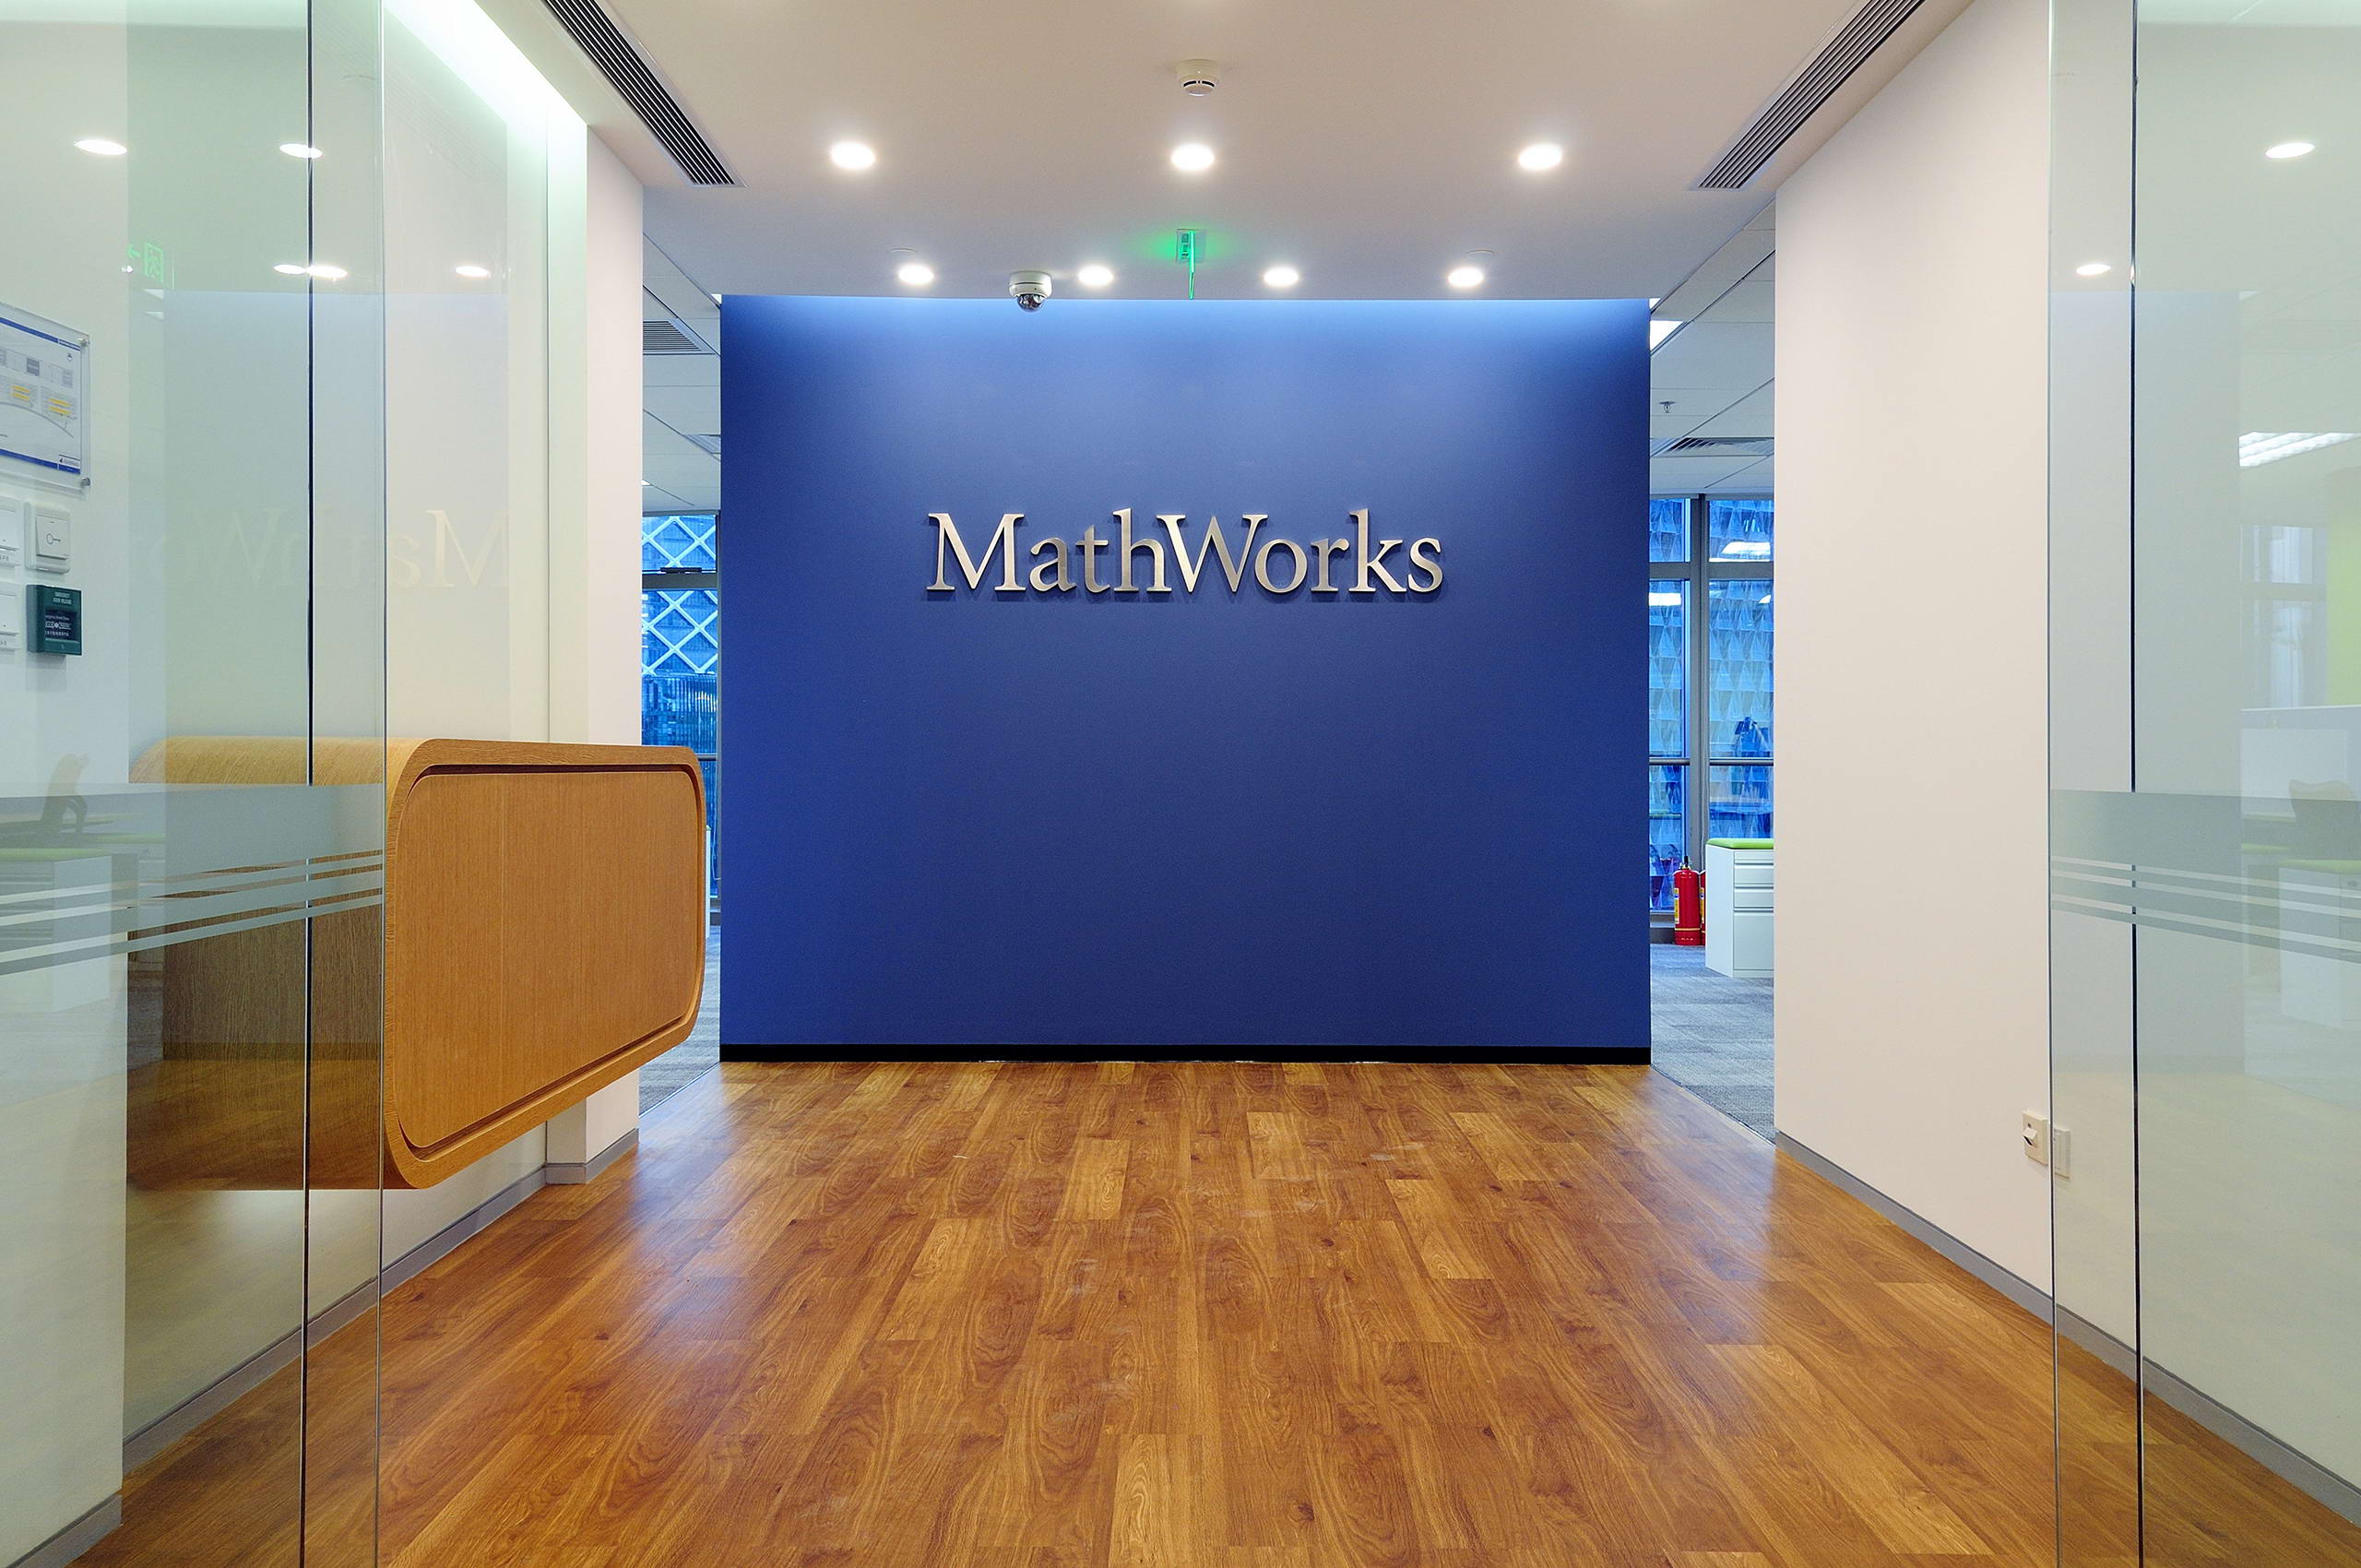 MathWorks